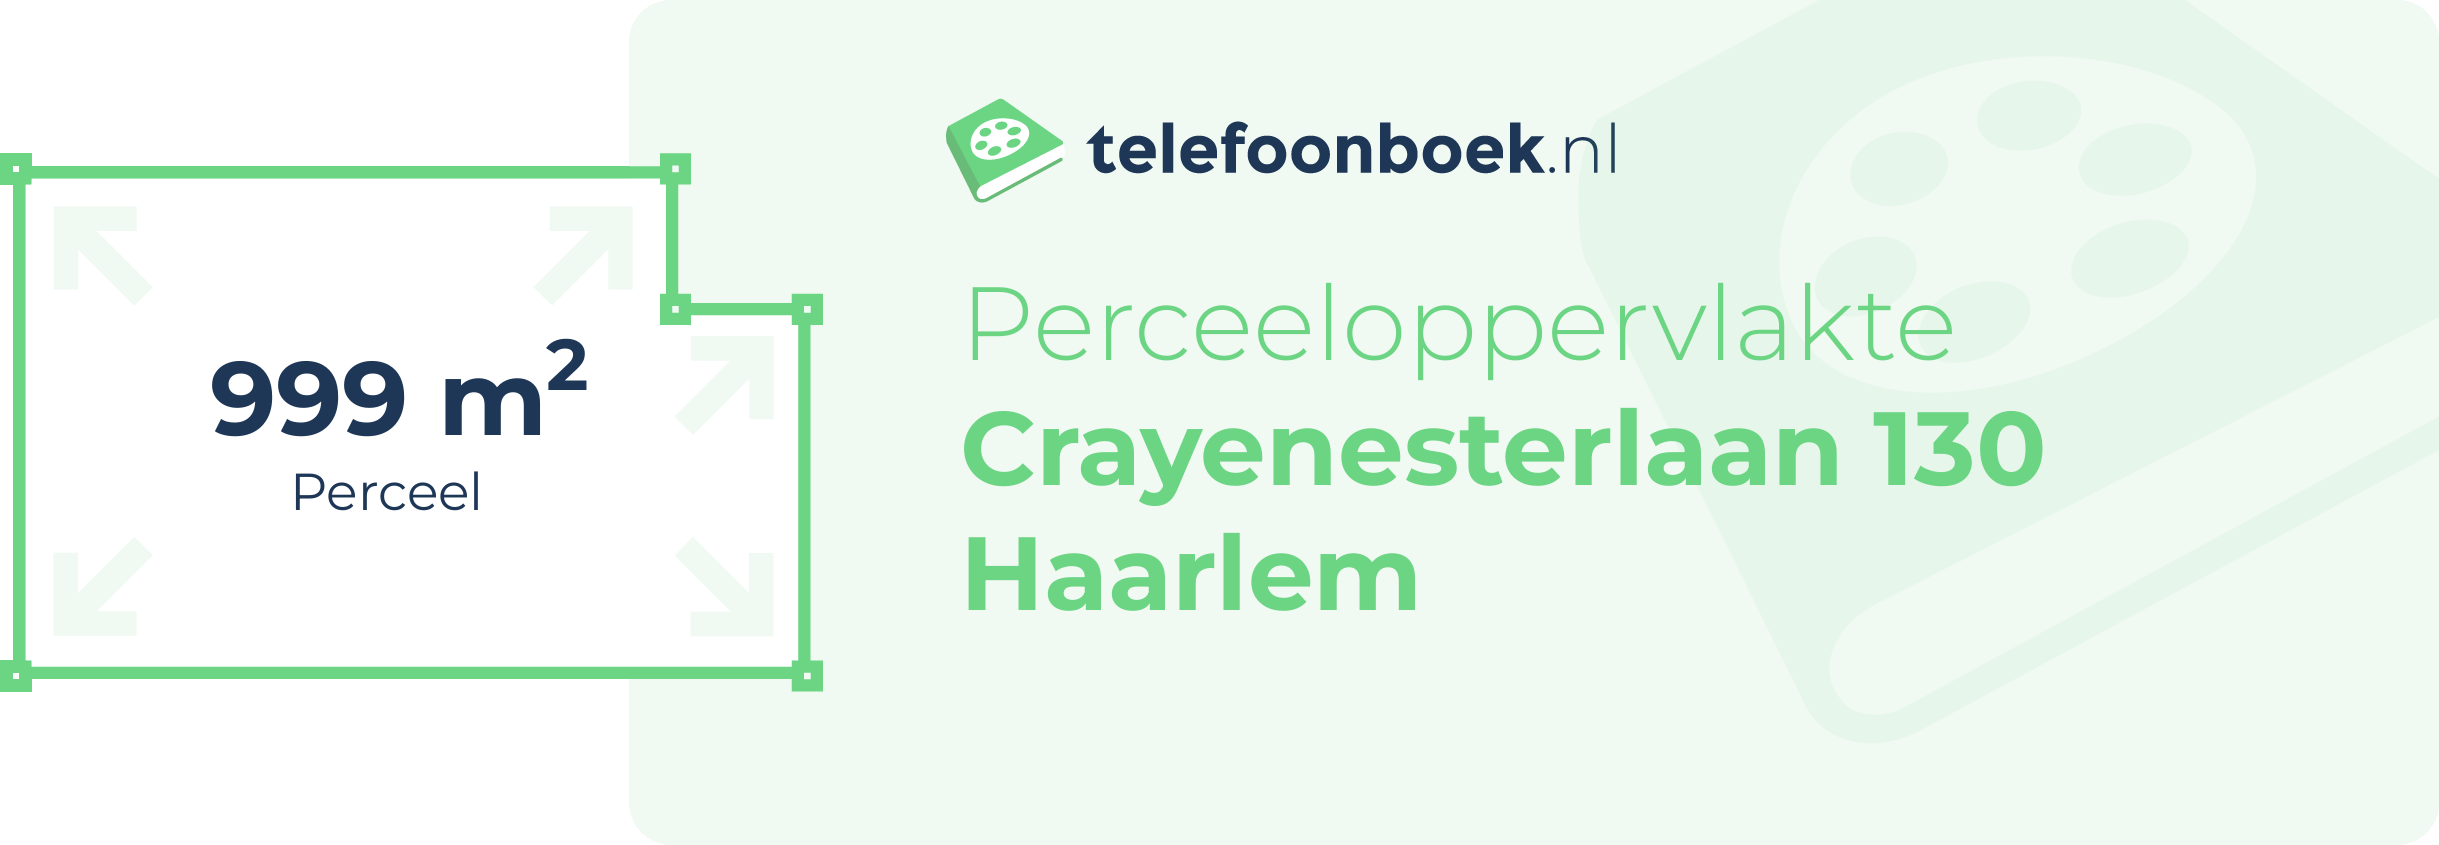 Perceeloppervlakte Crayenesterlaan 130 Haarlem